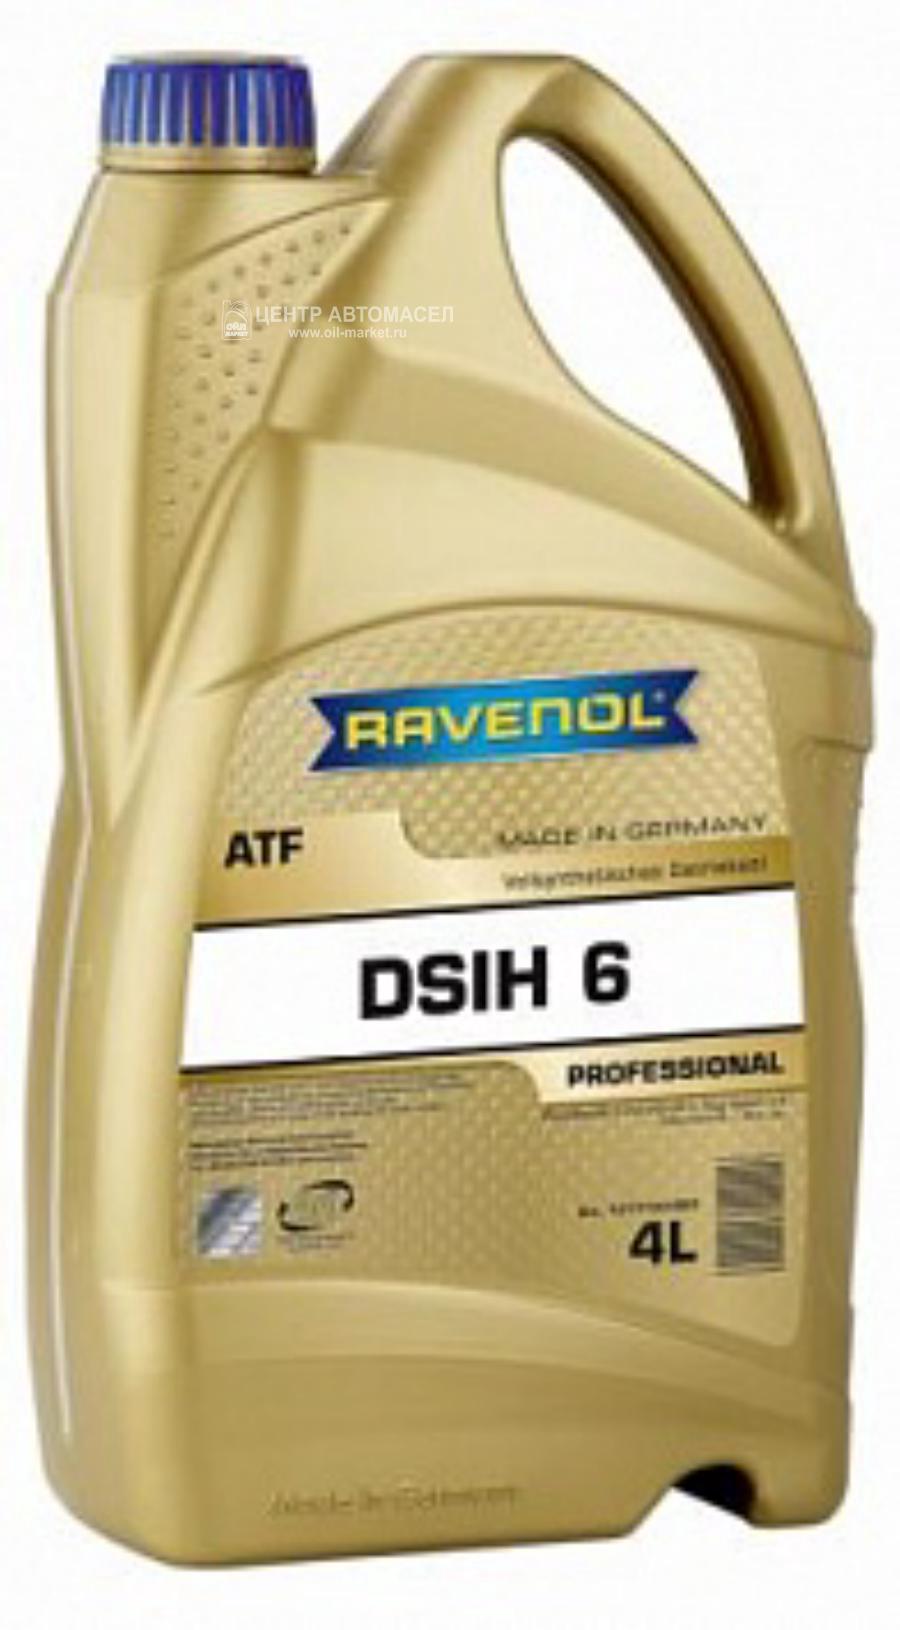 121113300401999 RAVENOL Полностью синтетическое масло для 6-ступенчатых акпп dsih для ssangyong kyron, actyon, actyon sports, geely gc7, gx7, sc7 und ec